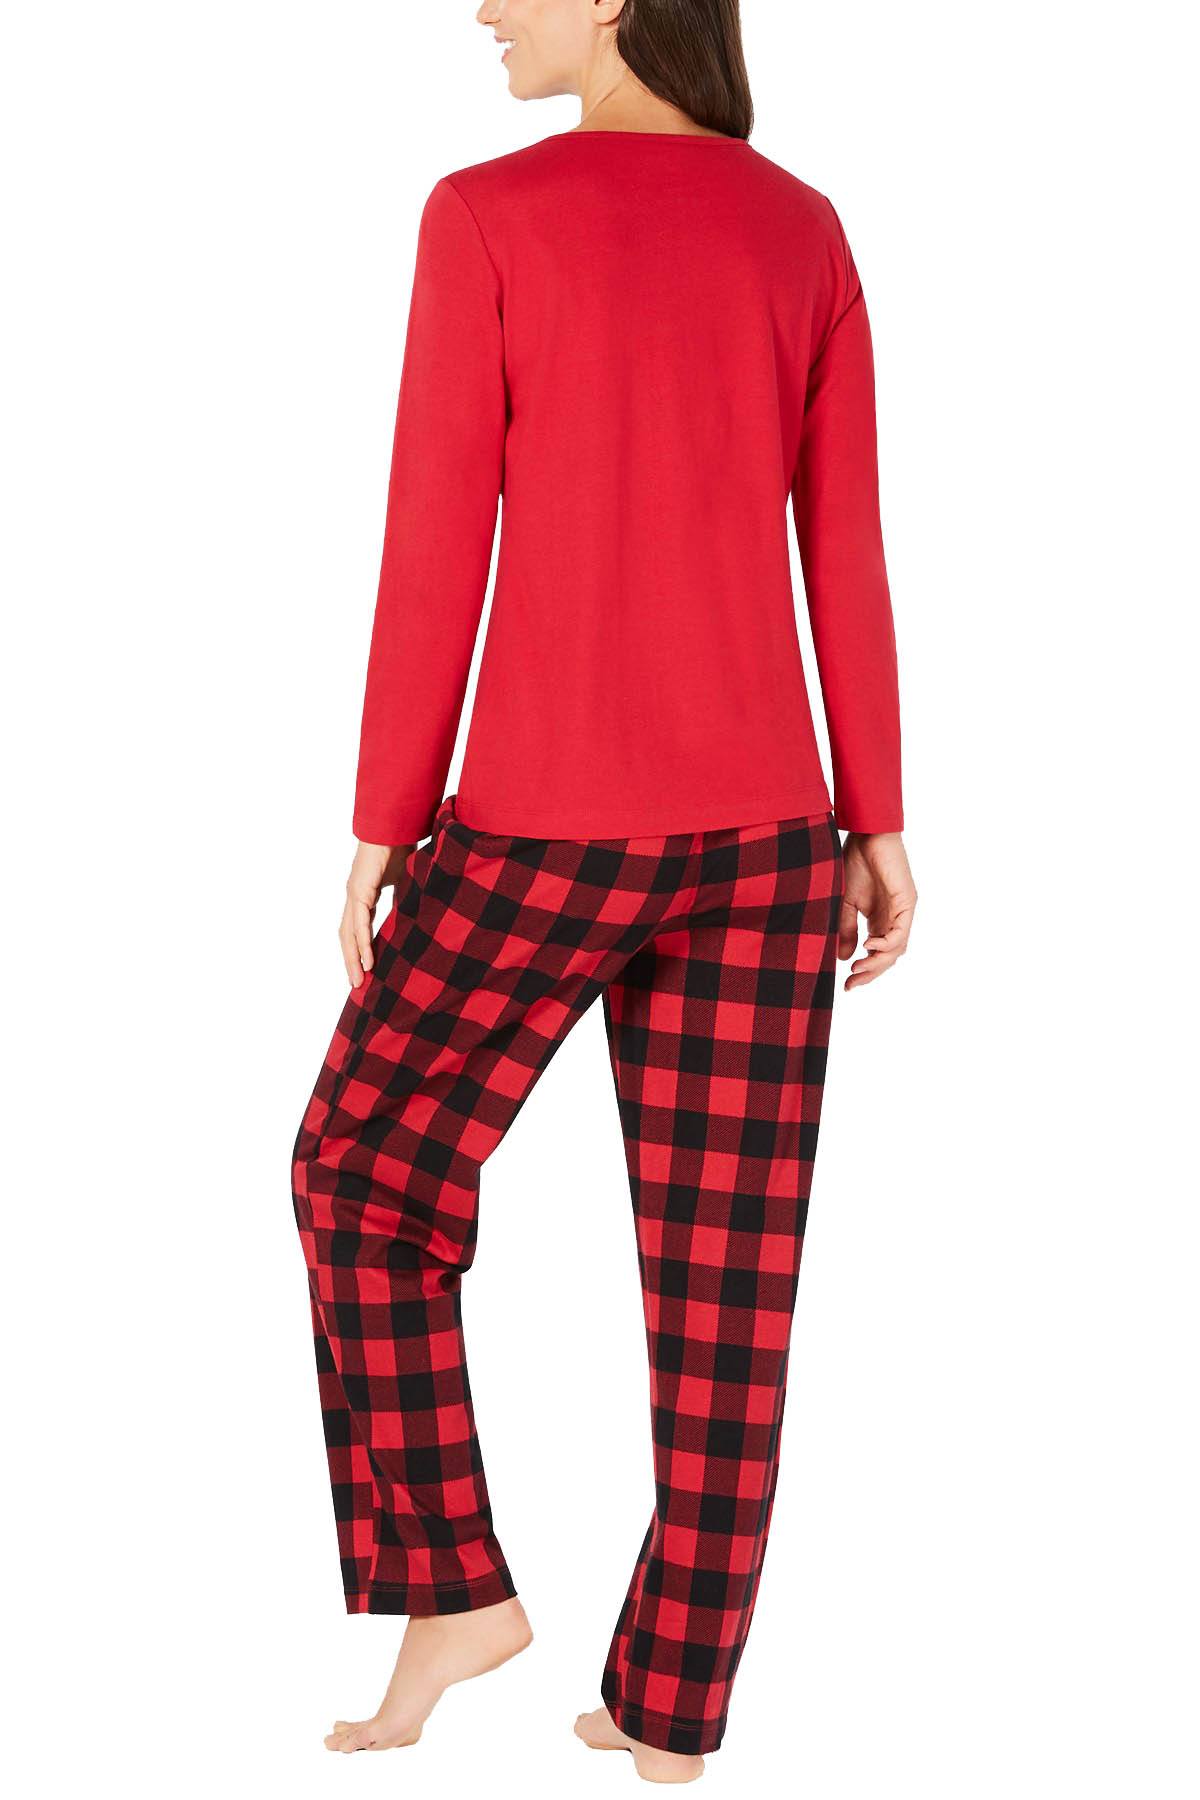 Family PJs Red Graphic Print Fleece Navidad 2-Pc Pajama Set